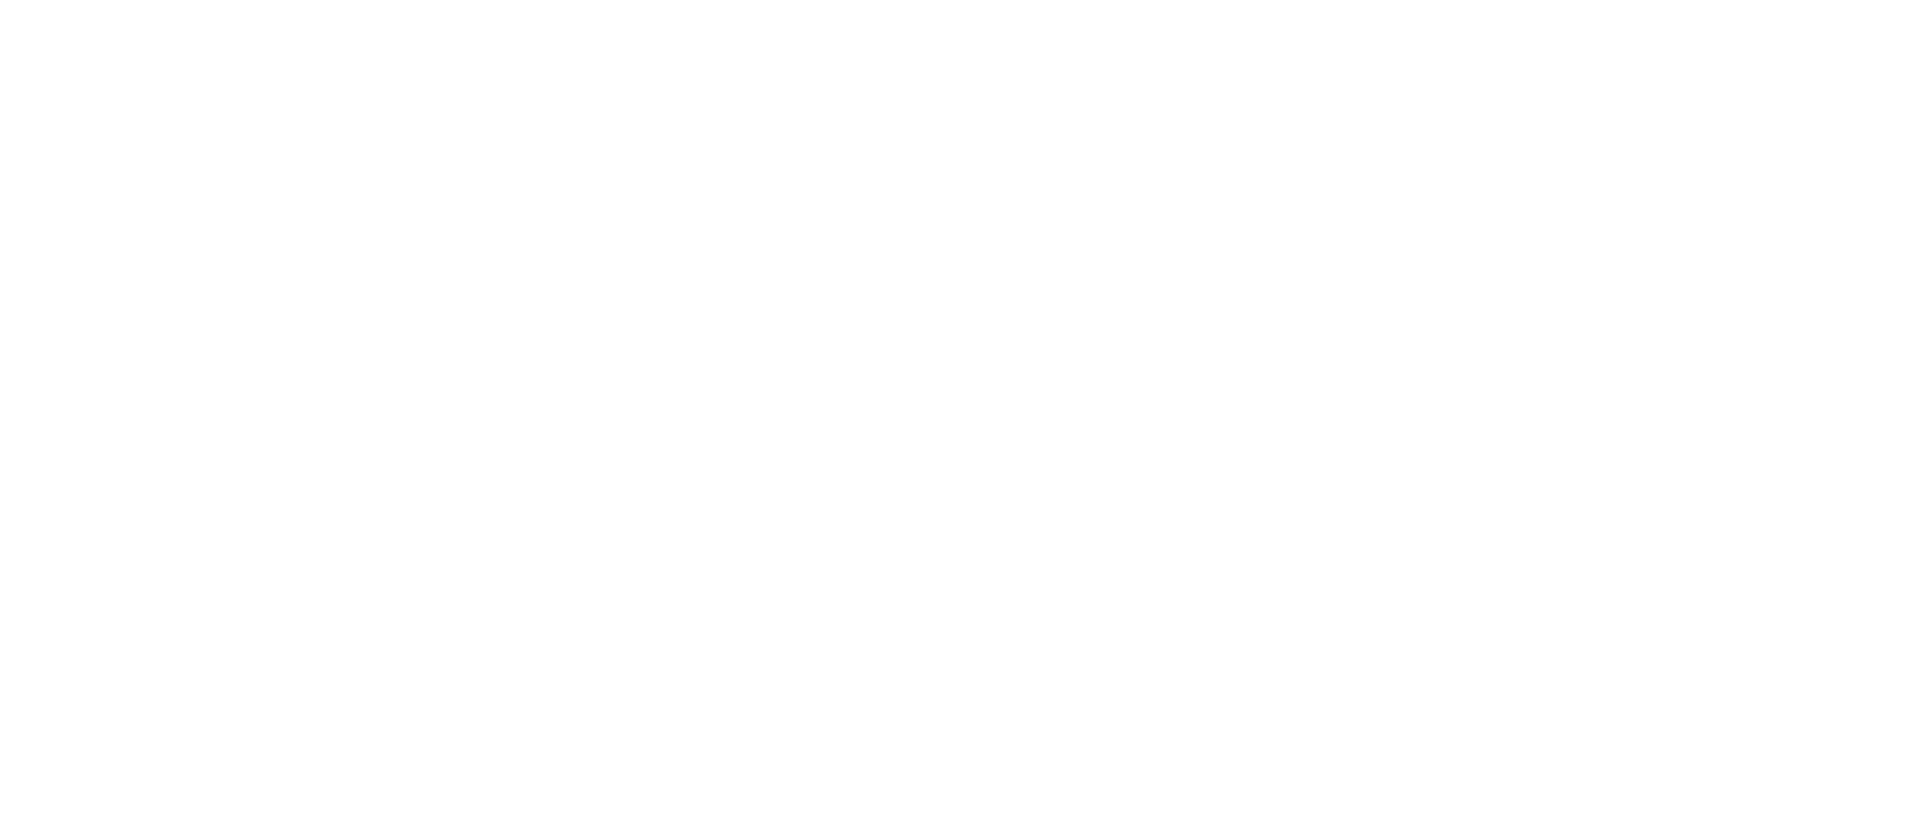 Select Softball White Main copy